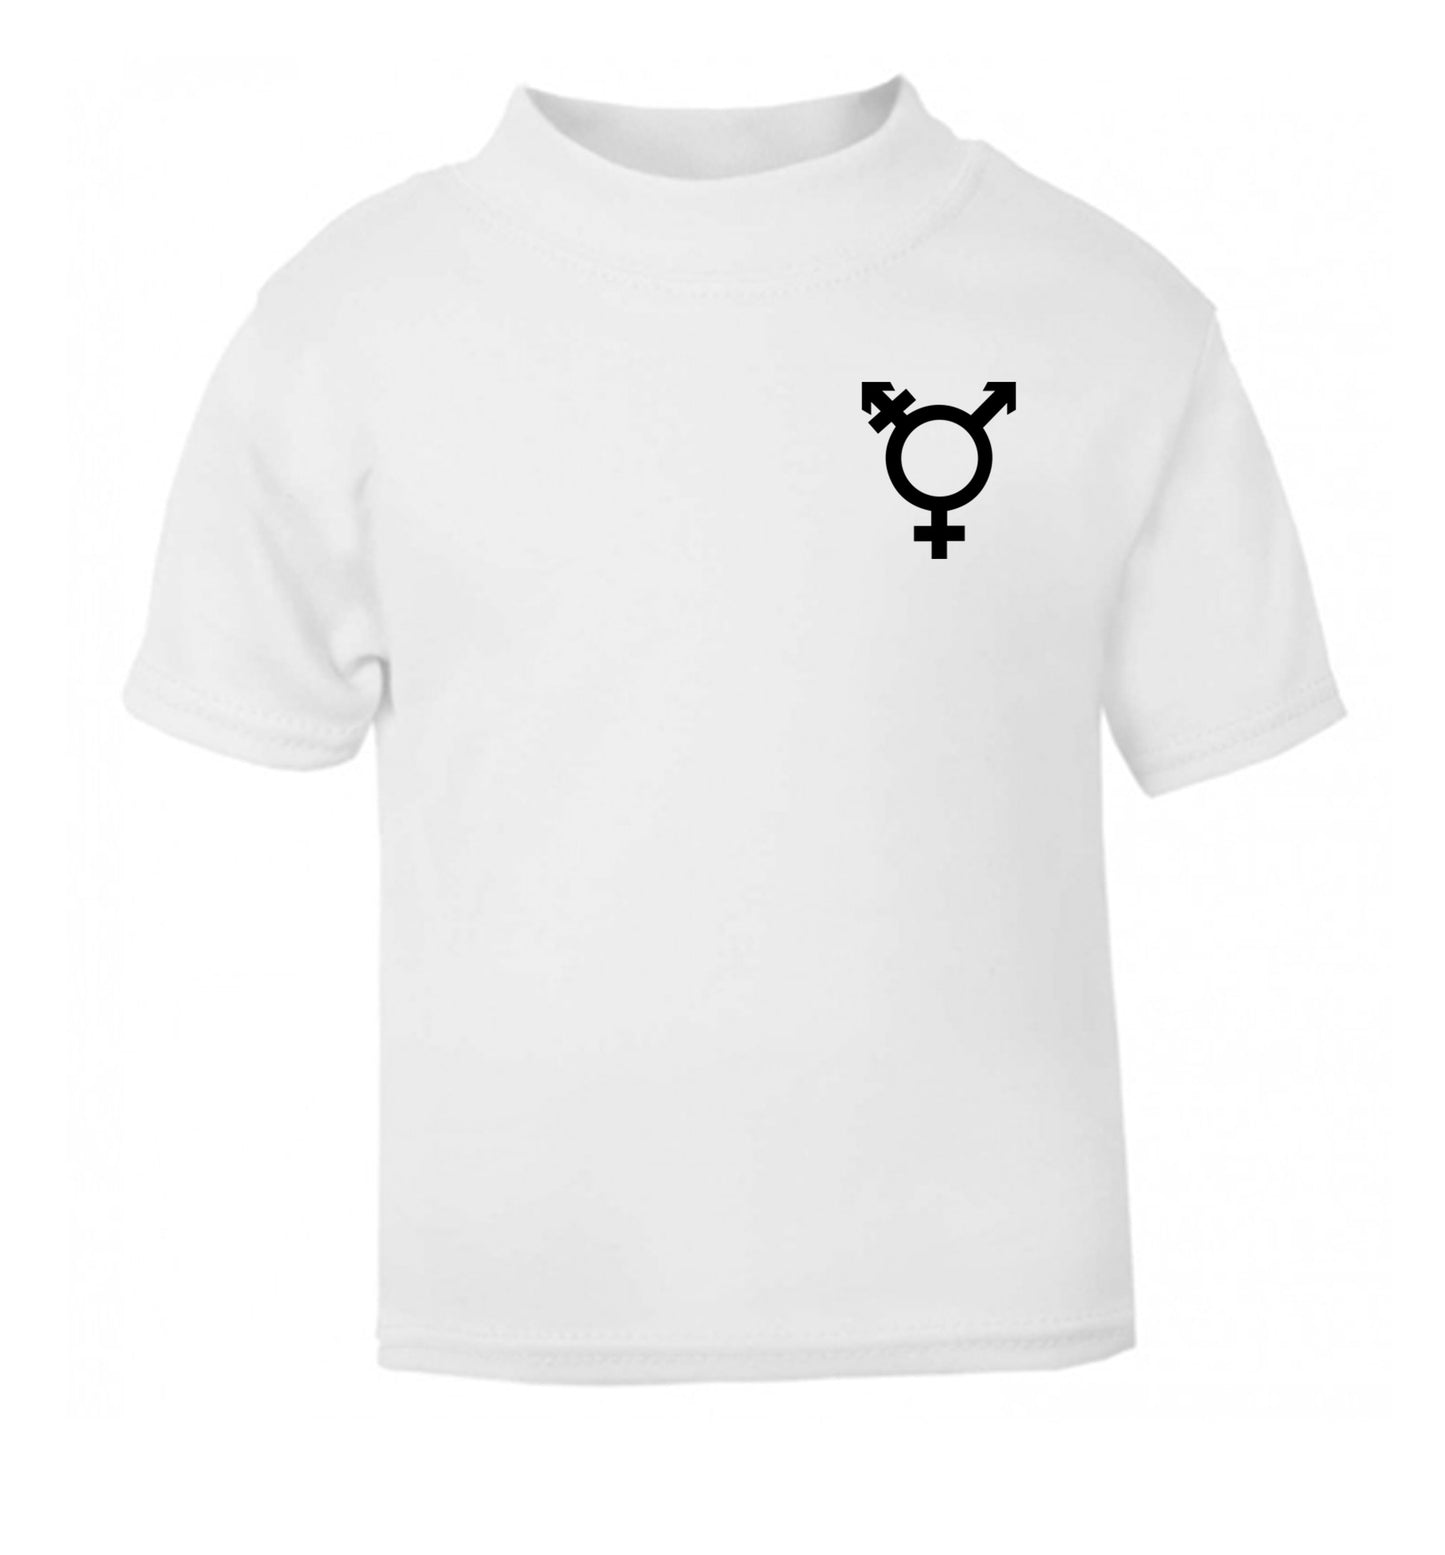 Trans gender symbol pocket white Baby Toddler Tshirt 2 Years